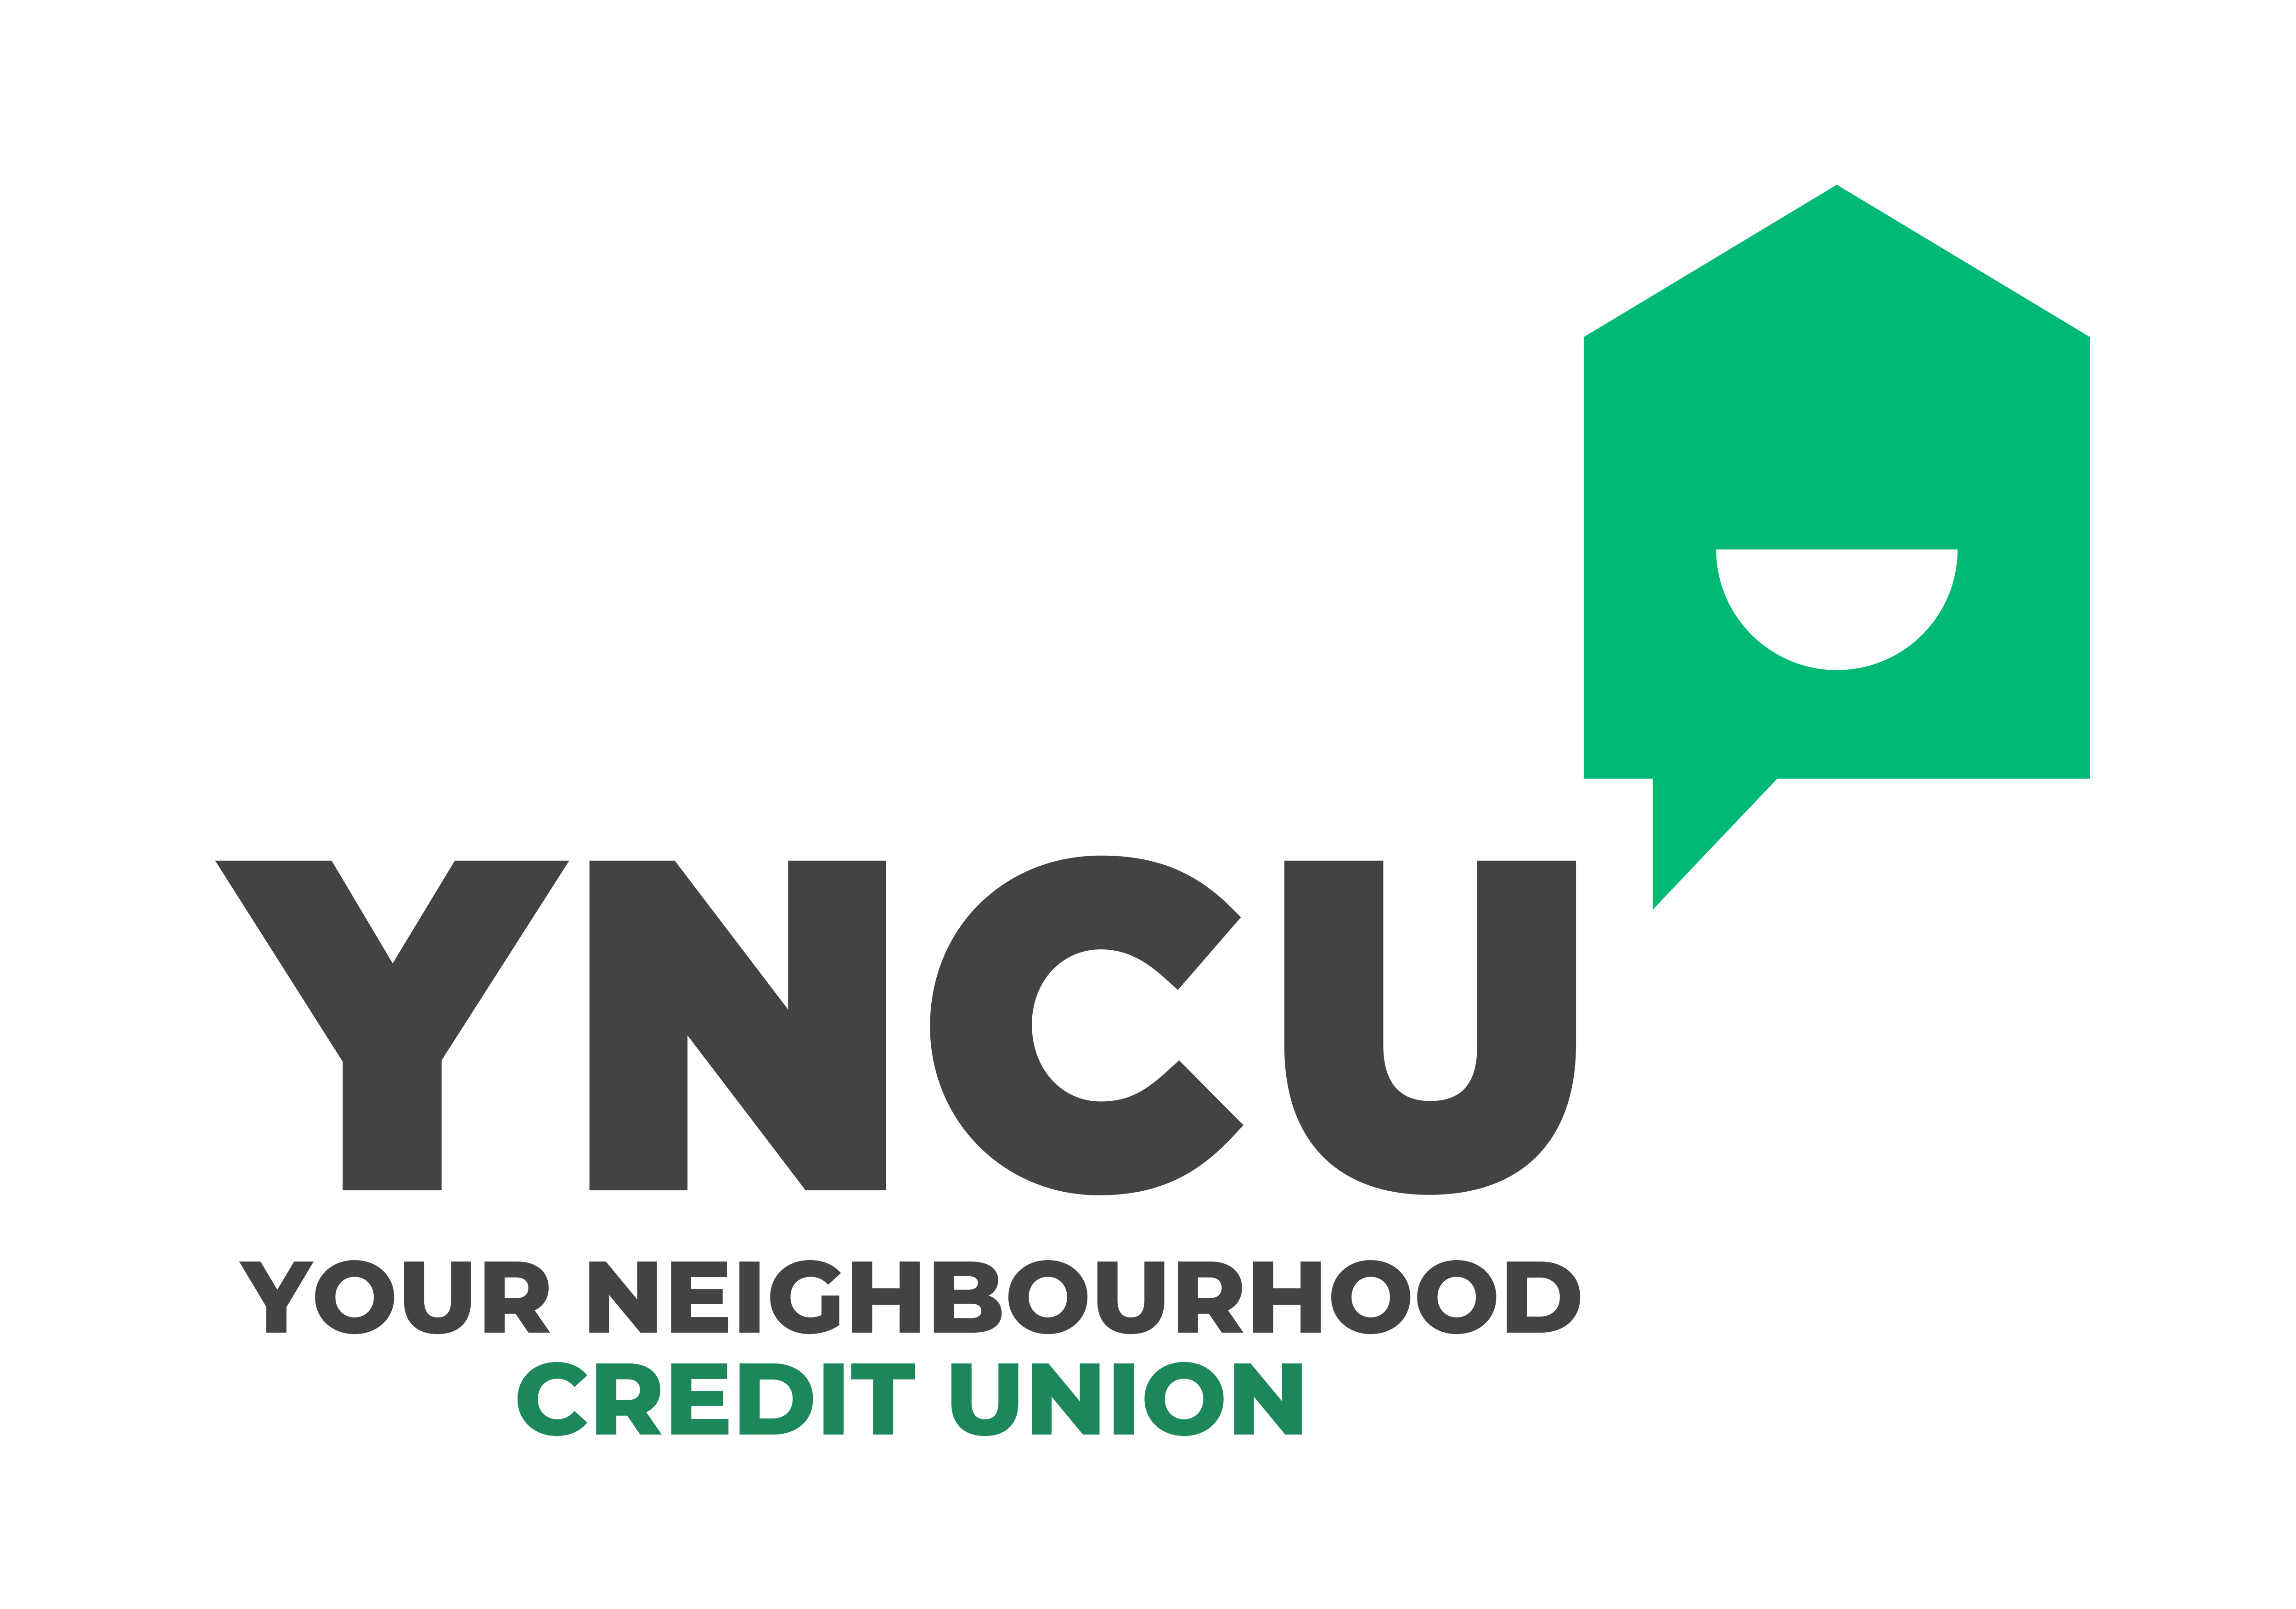 YNCU_Extended_Logo